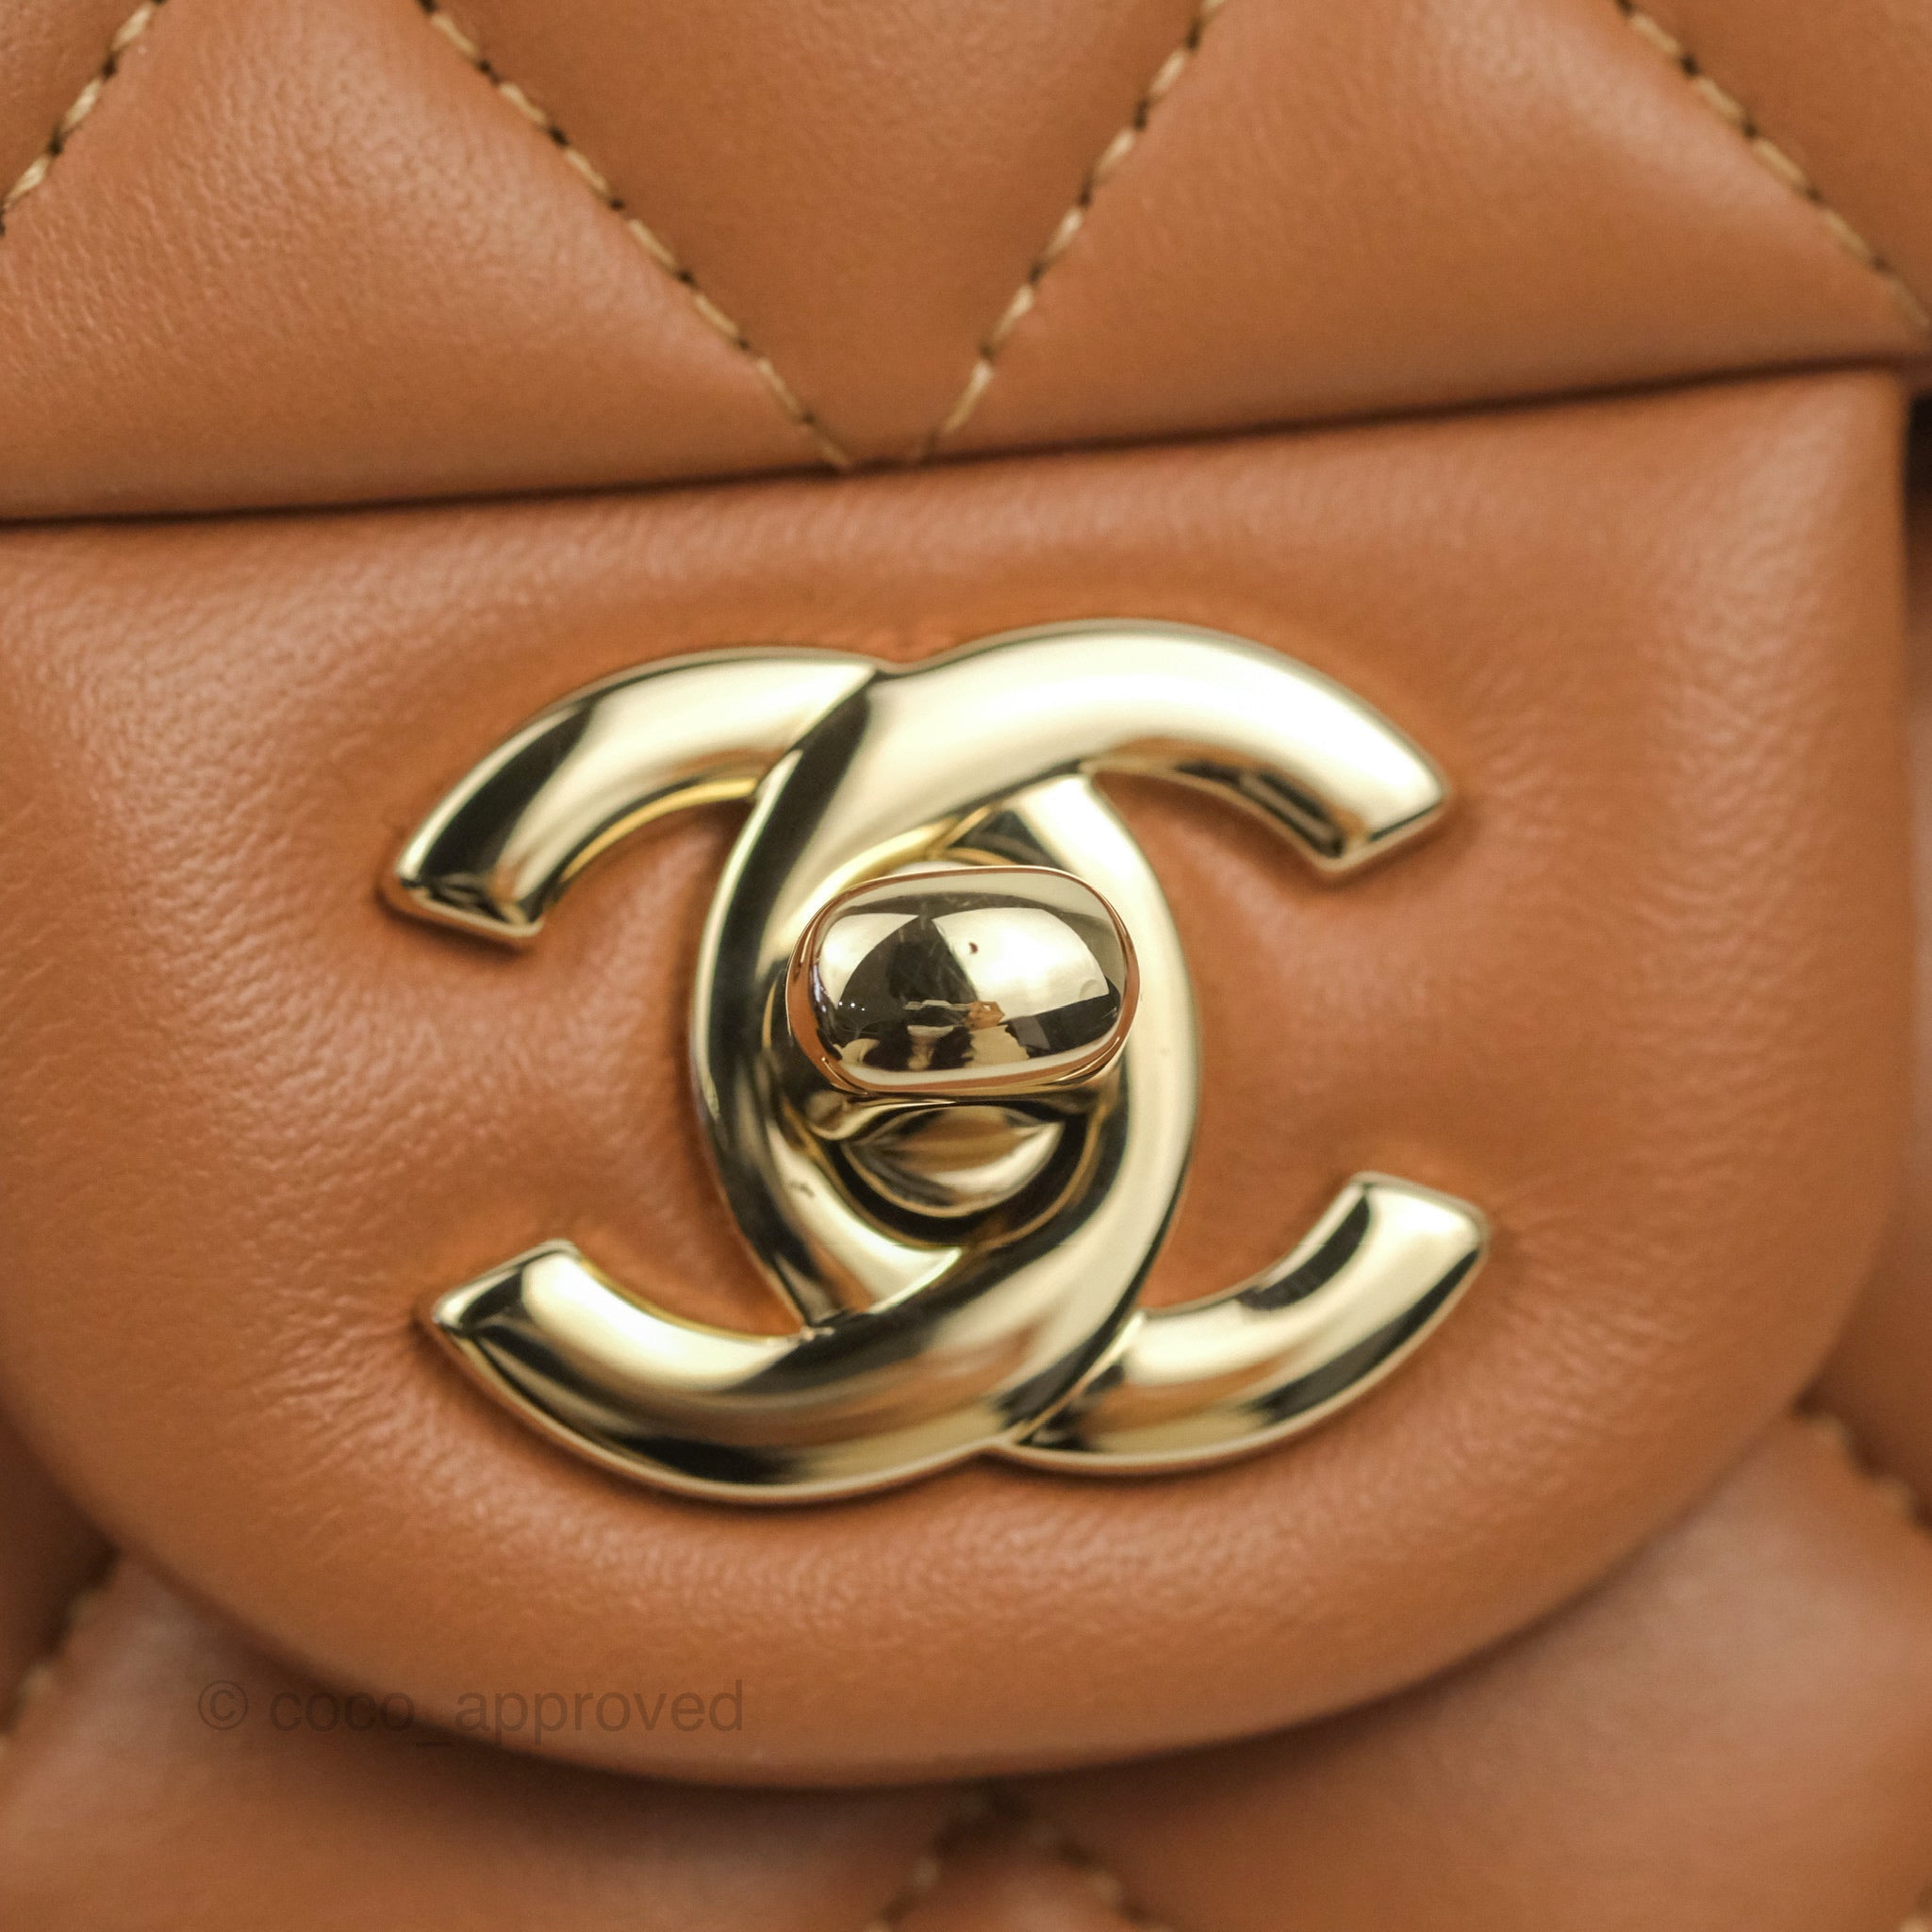 Chanel 22S Mini Rectangular bag caramel lambskin